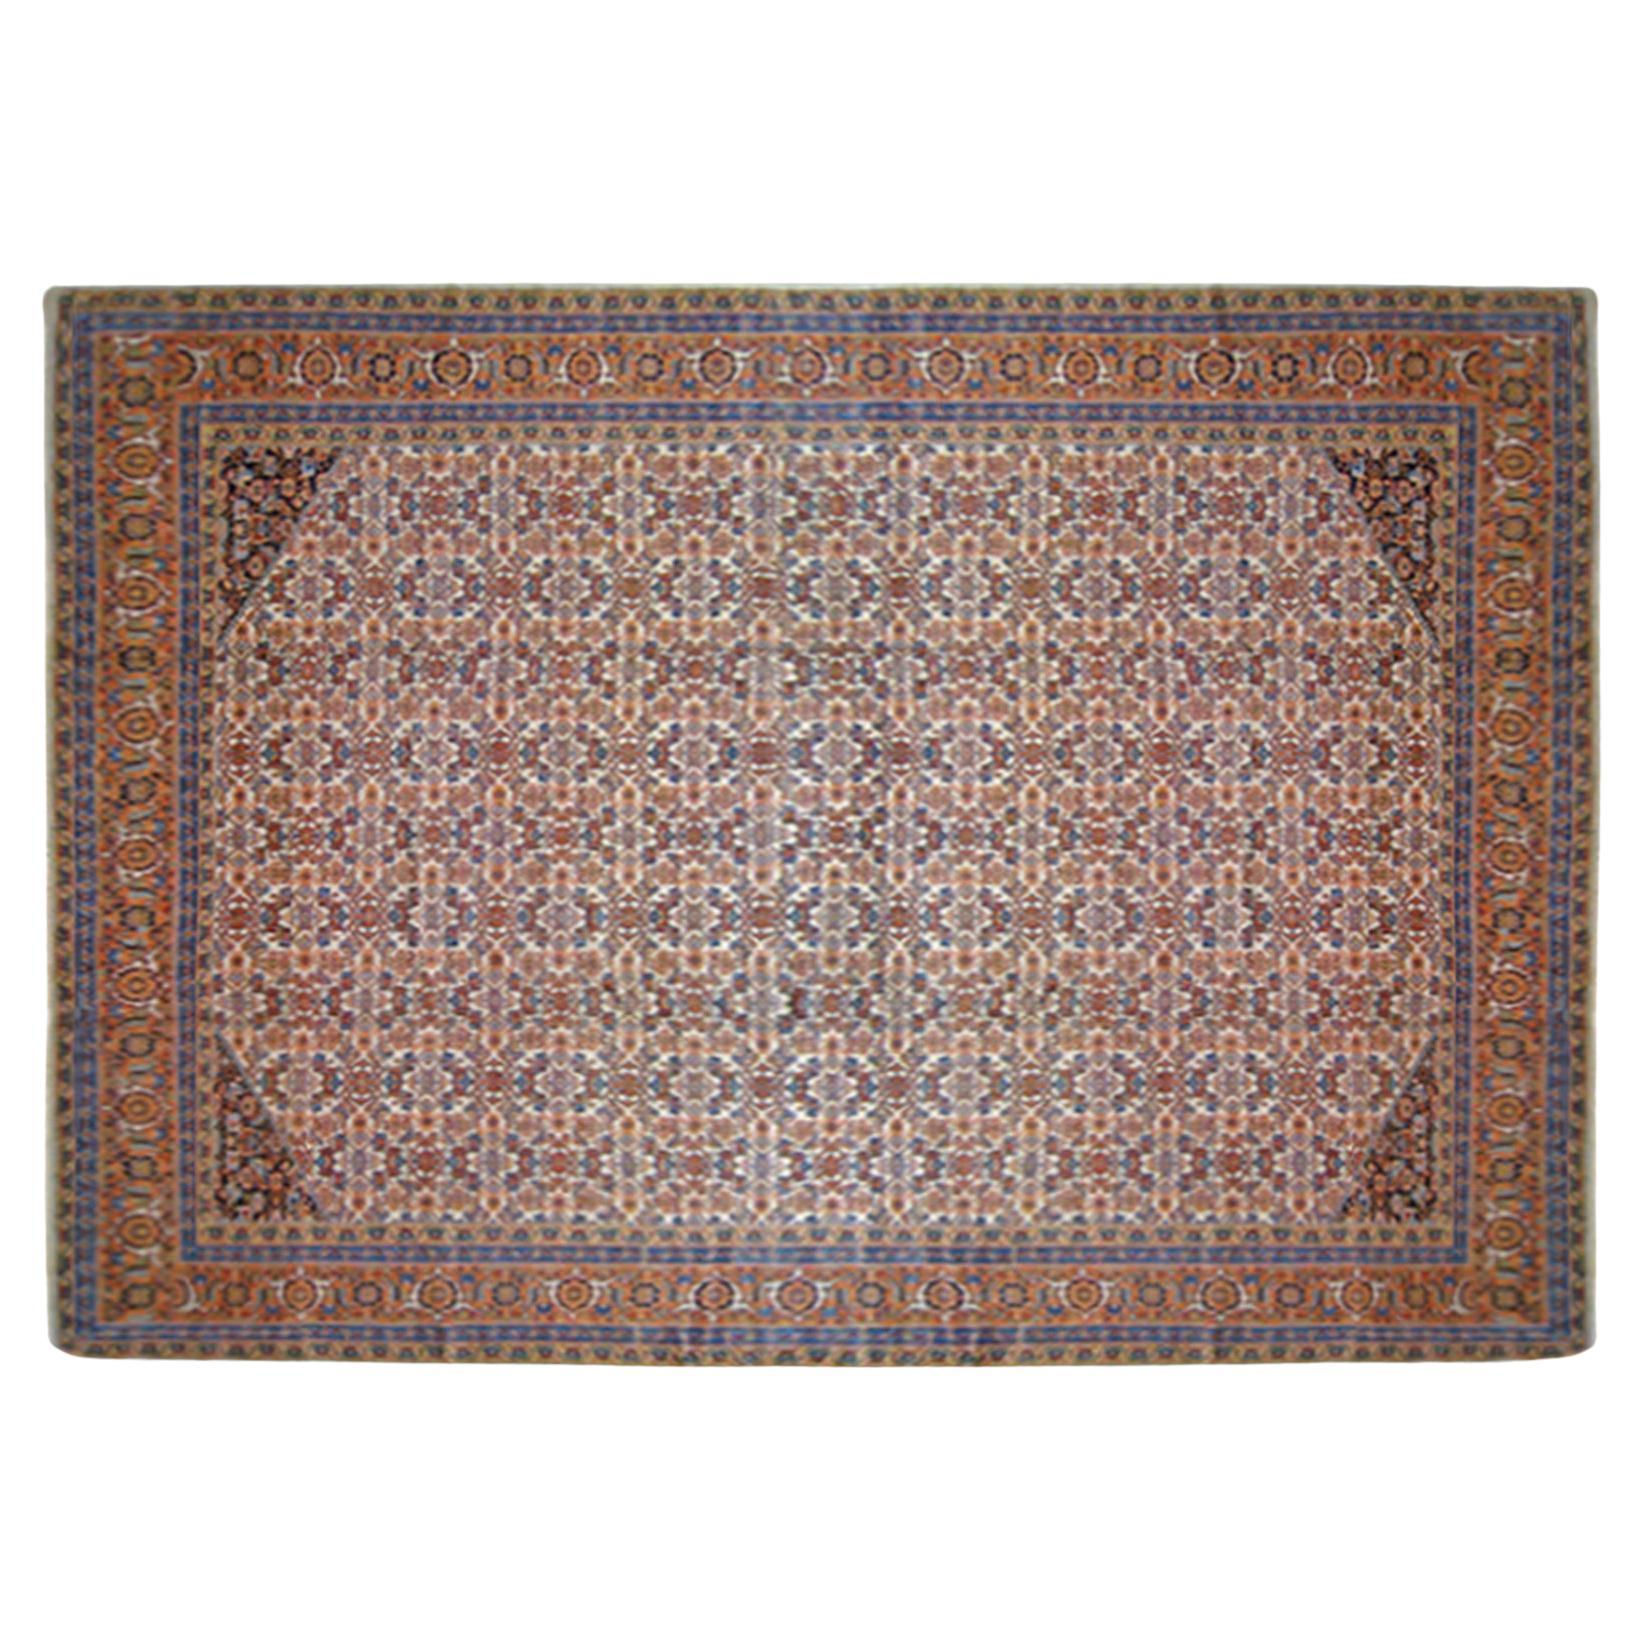 Antique Persian Tabriz Oriental Carpet in Room Size with Herati Design